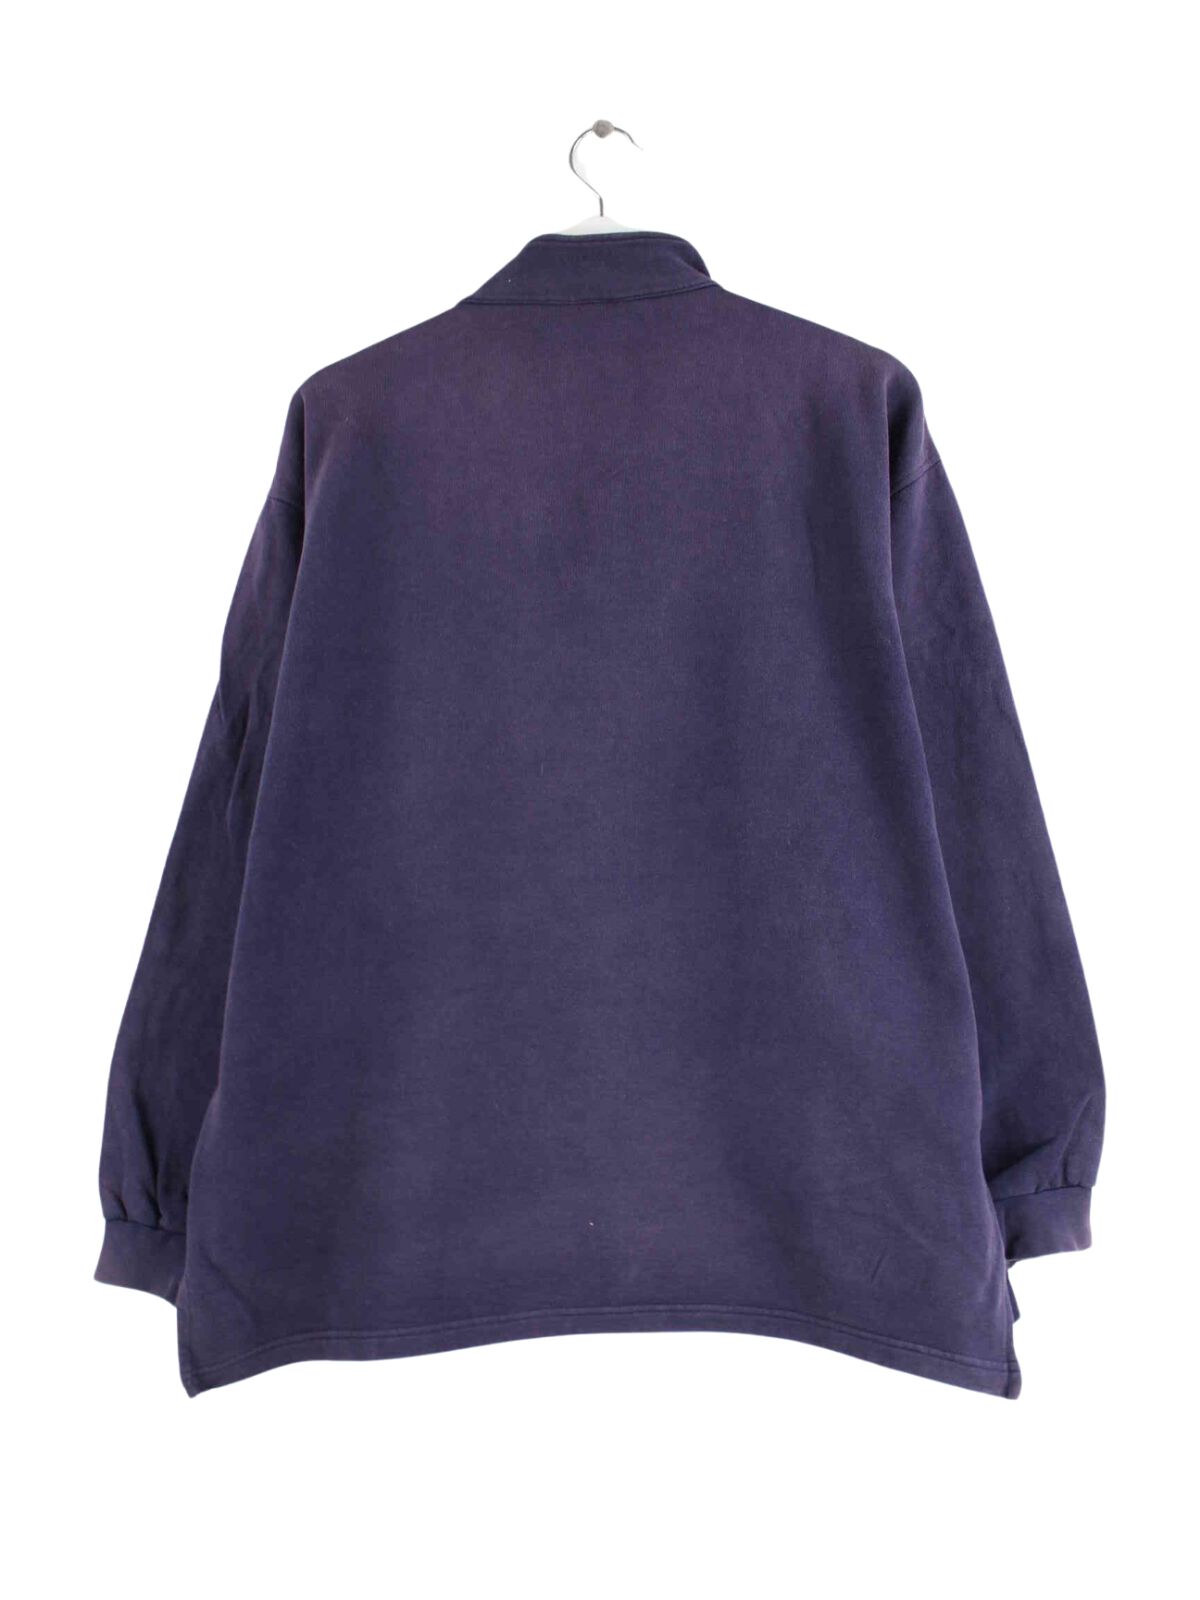 Reebok Embroidered Half Zip Sweater Blau L (back image)